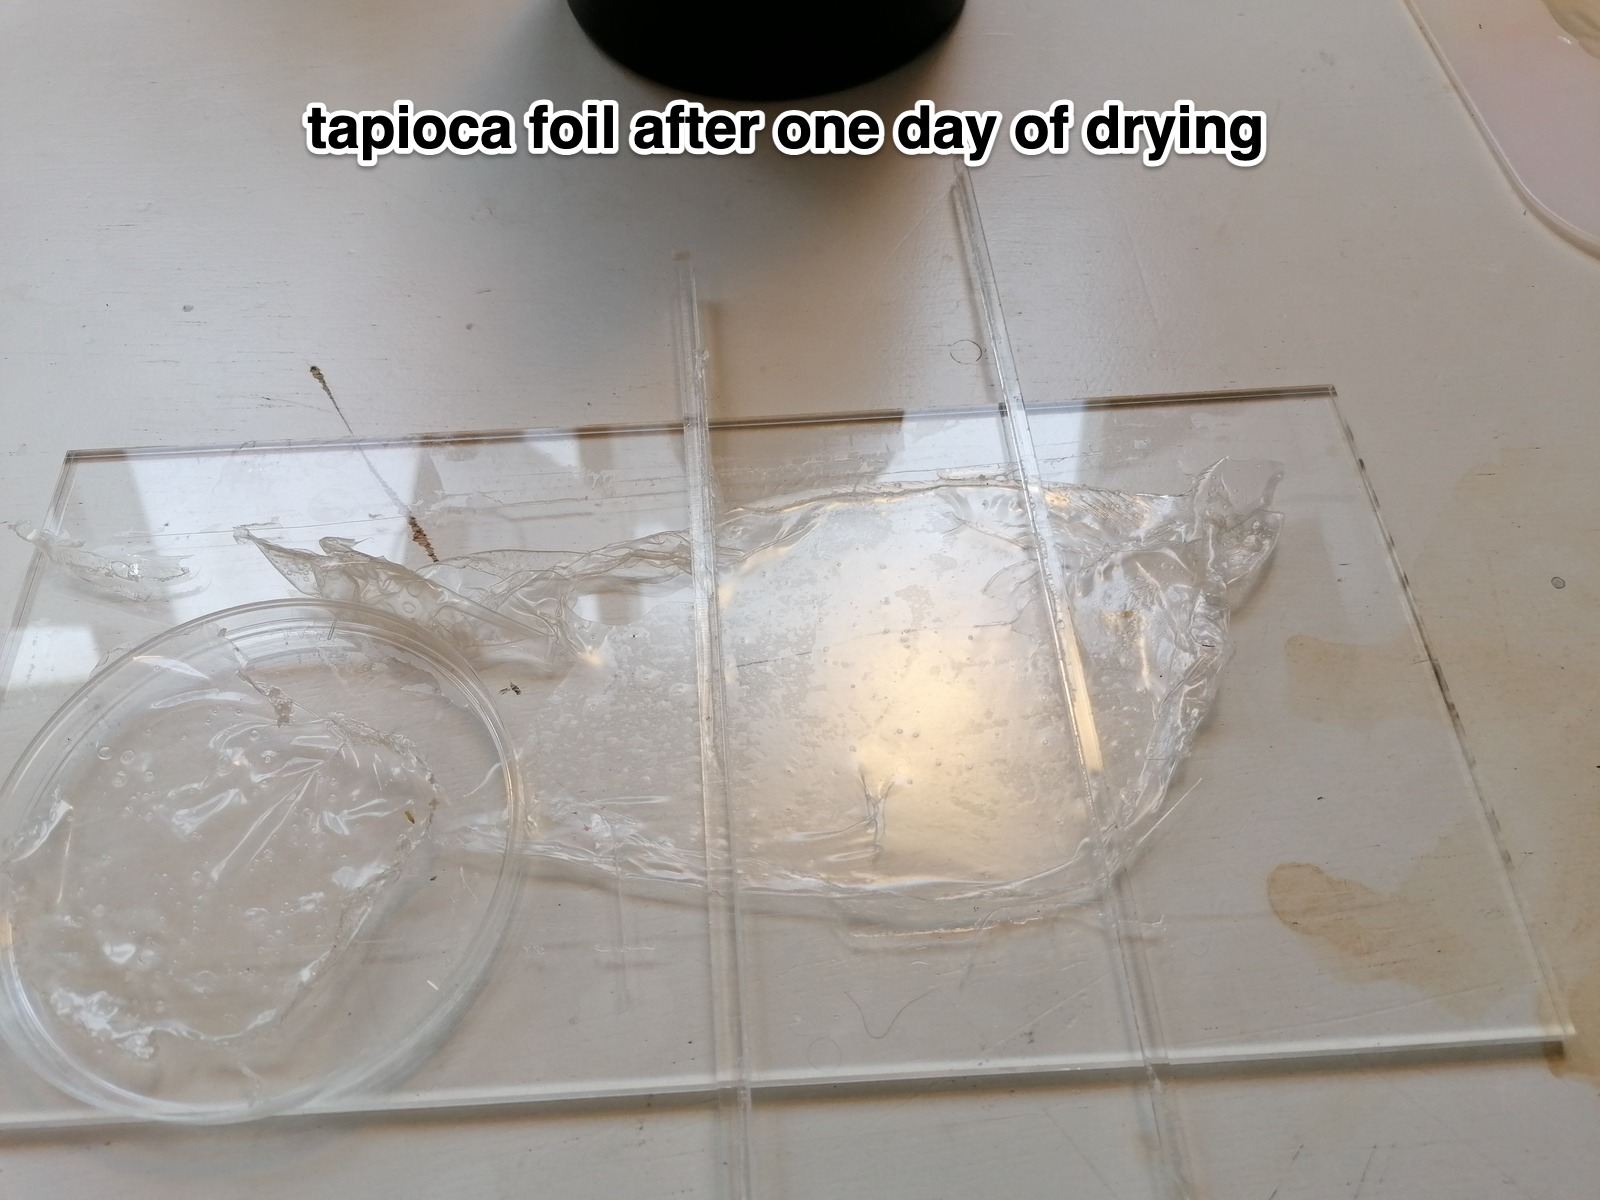 drying tapioca foil